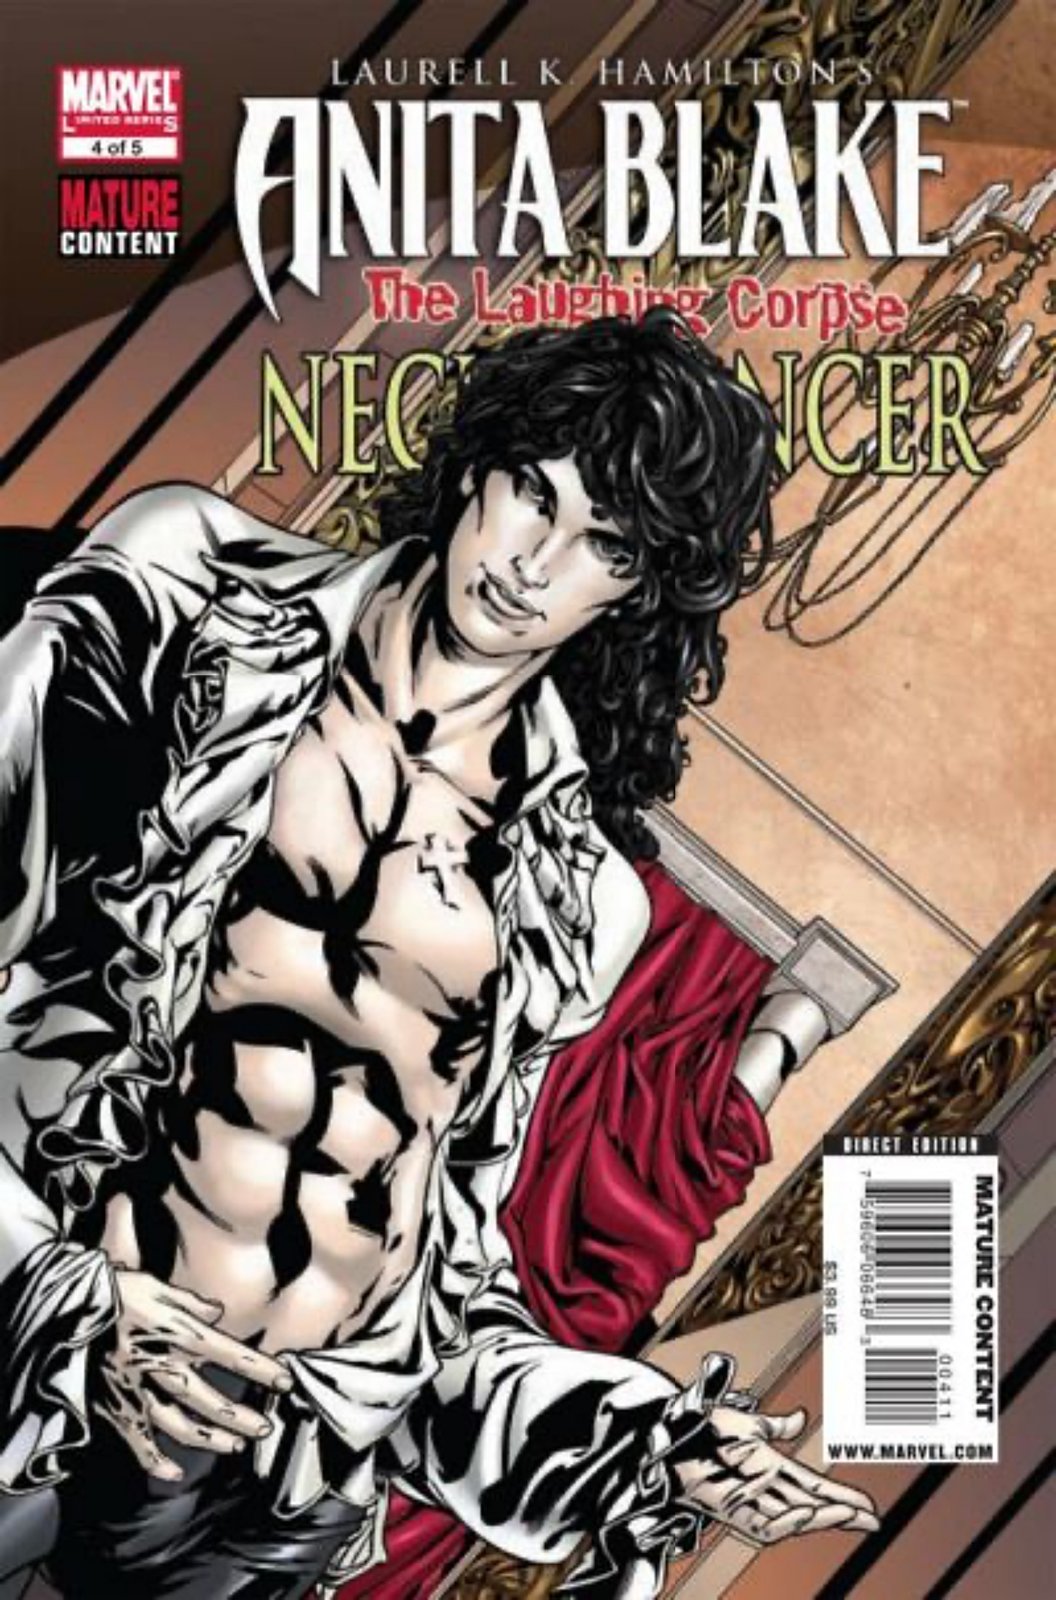 Anita Blake: The Laughing Corpse - Necromancer #4 (2009) Marvel Comics